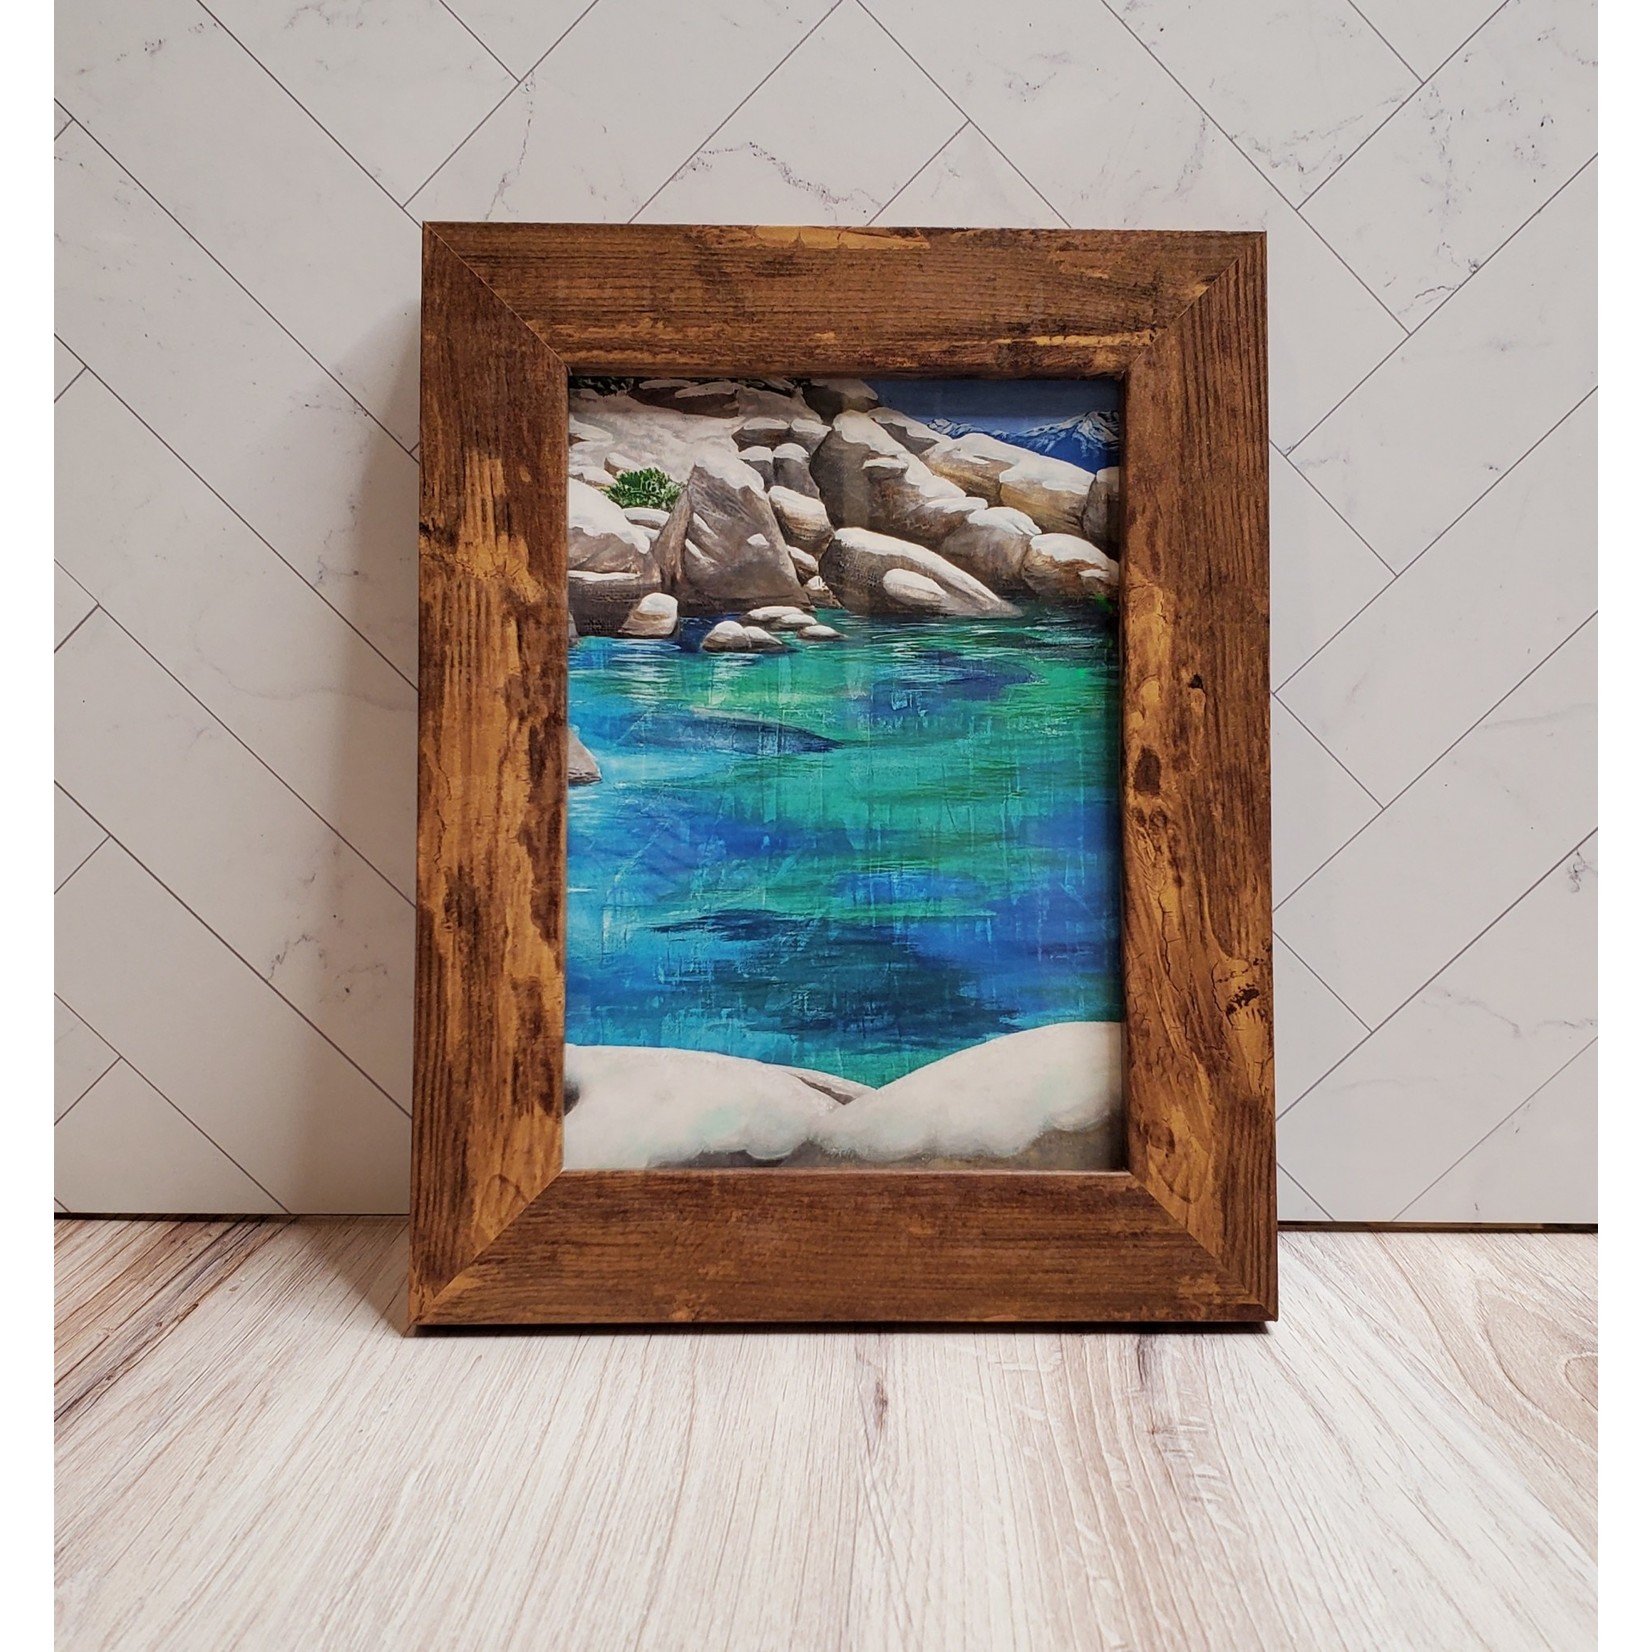 Sara L Smith "Winter Cove" - framed giclee print